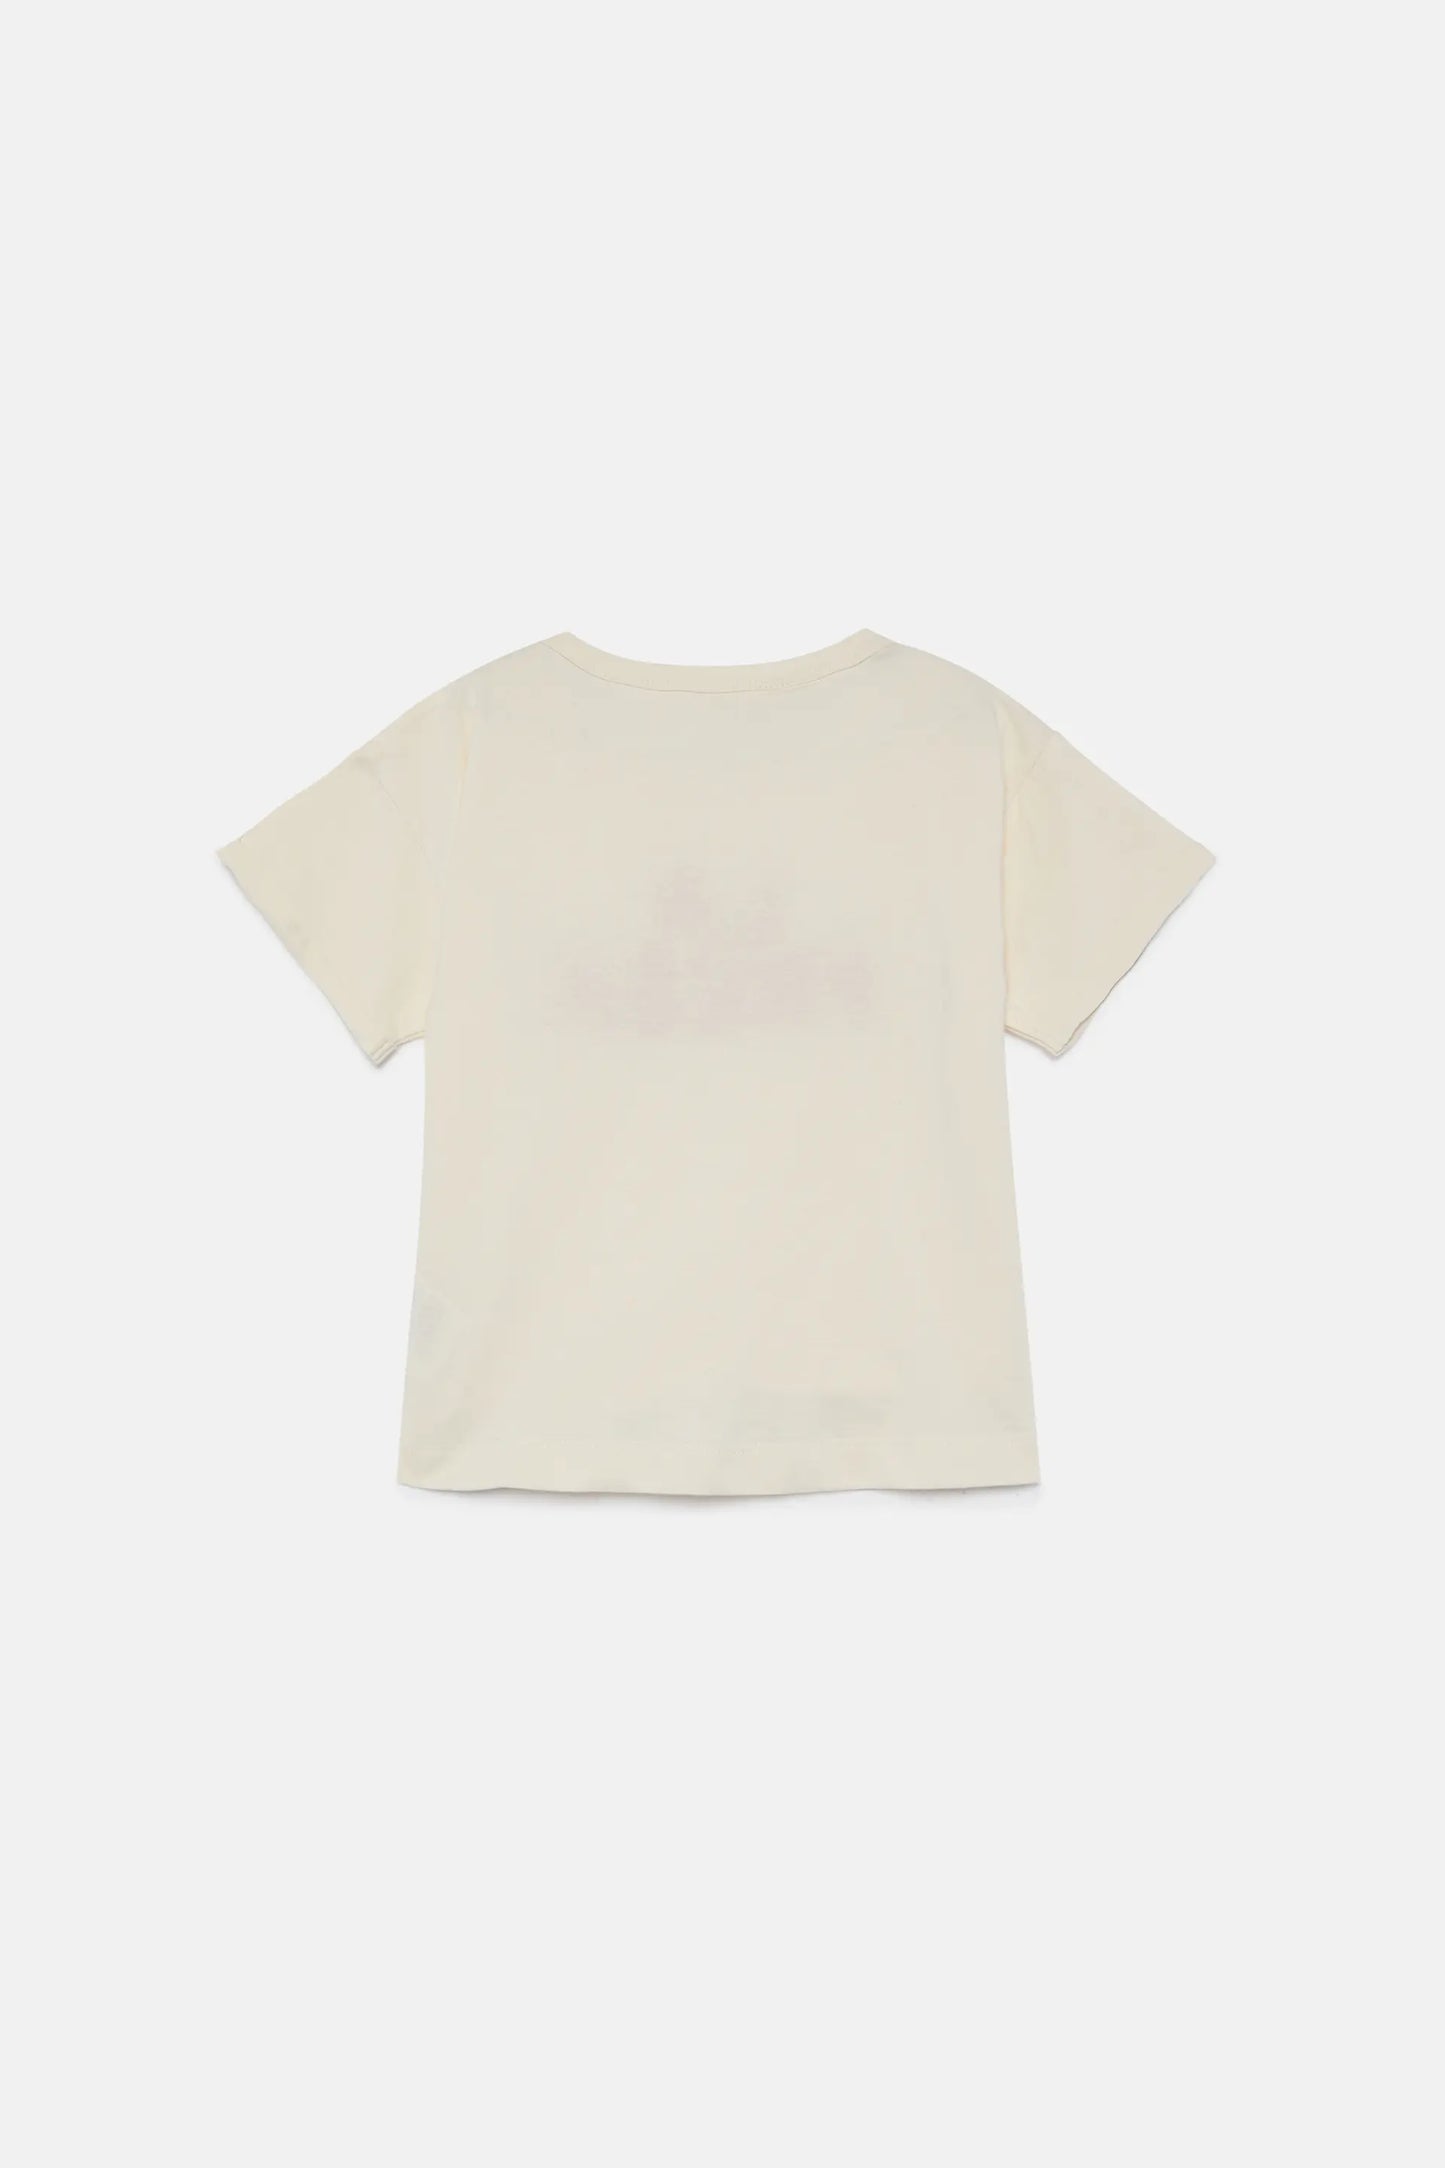 Camiseta unisex La Fresa blanca